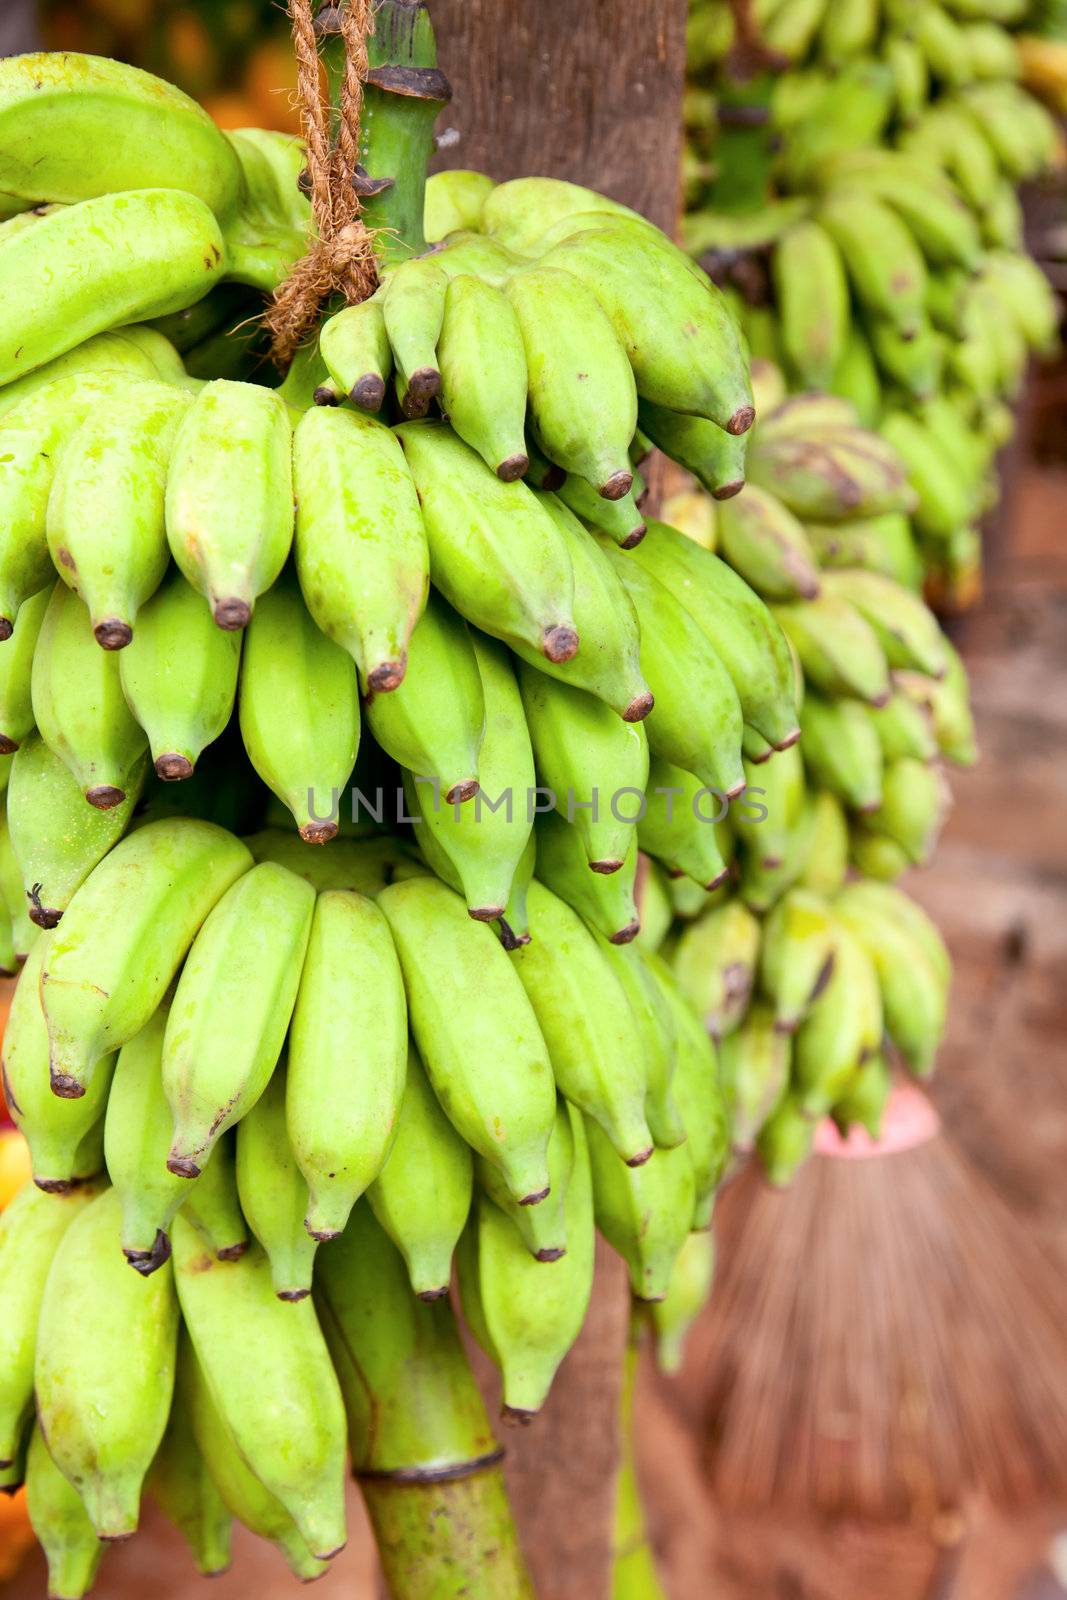 Banana bunch by naumoid